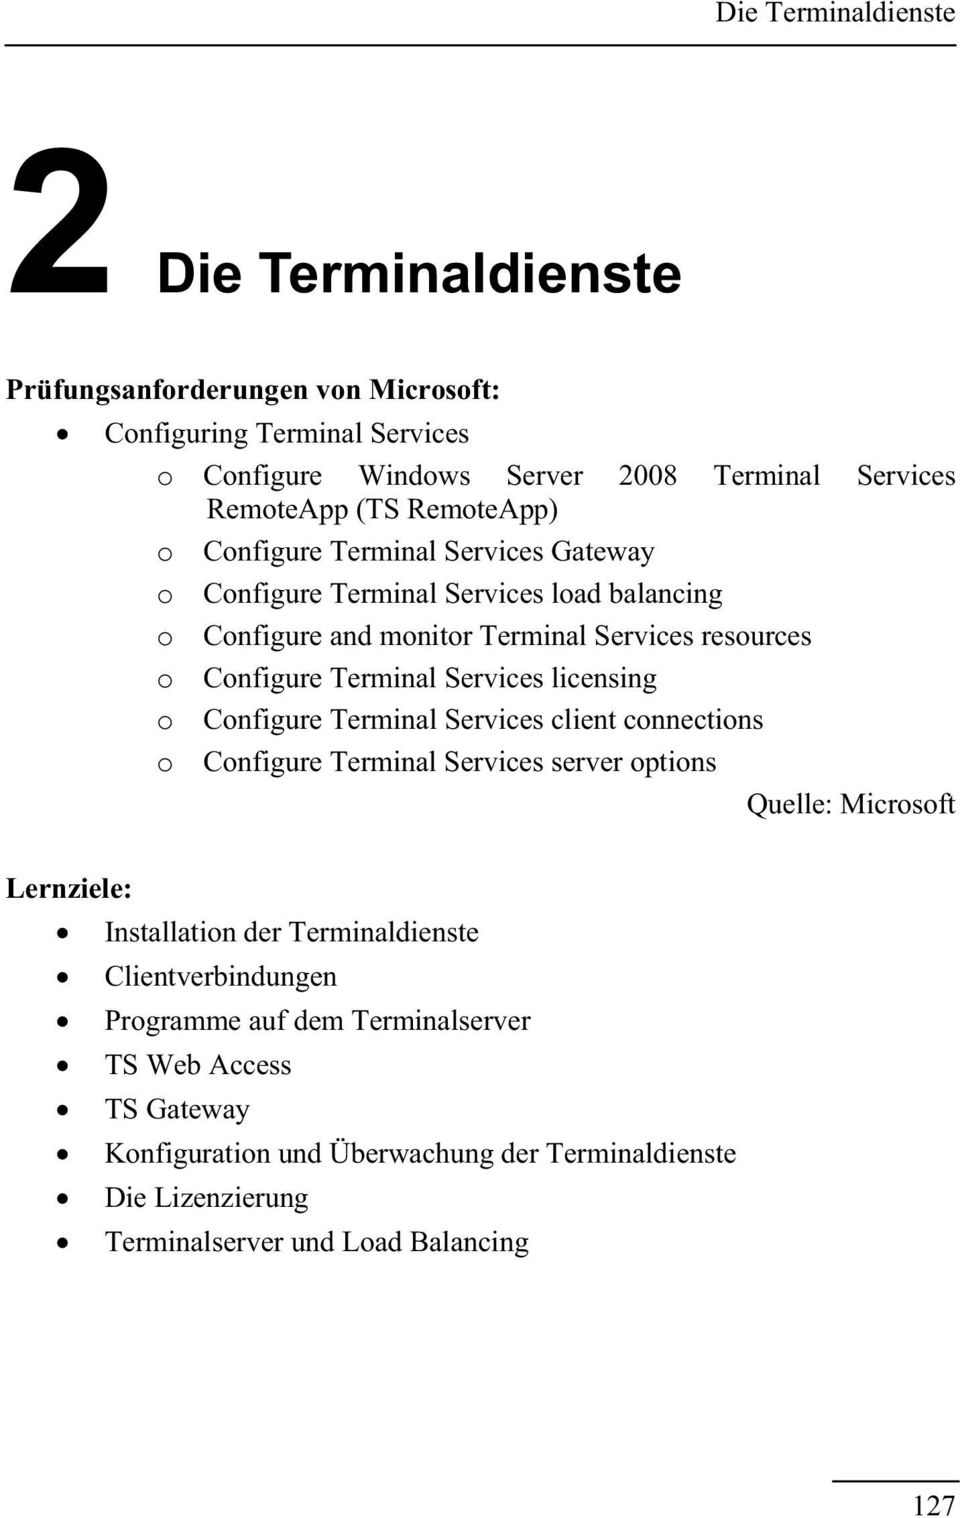 licensing o Configure Terminal Services client connections o Configure Terminal Services server options Quelle: Microsoft Lernziele: Installation der Terminaldienste